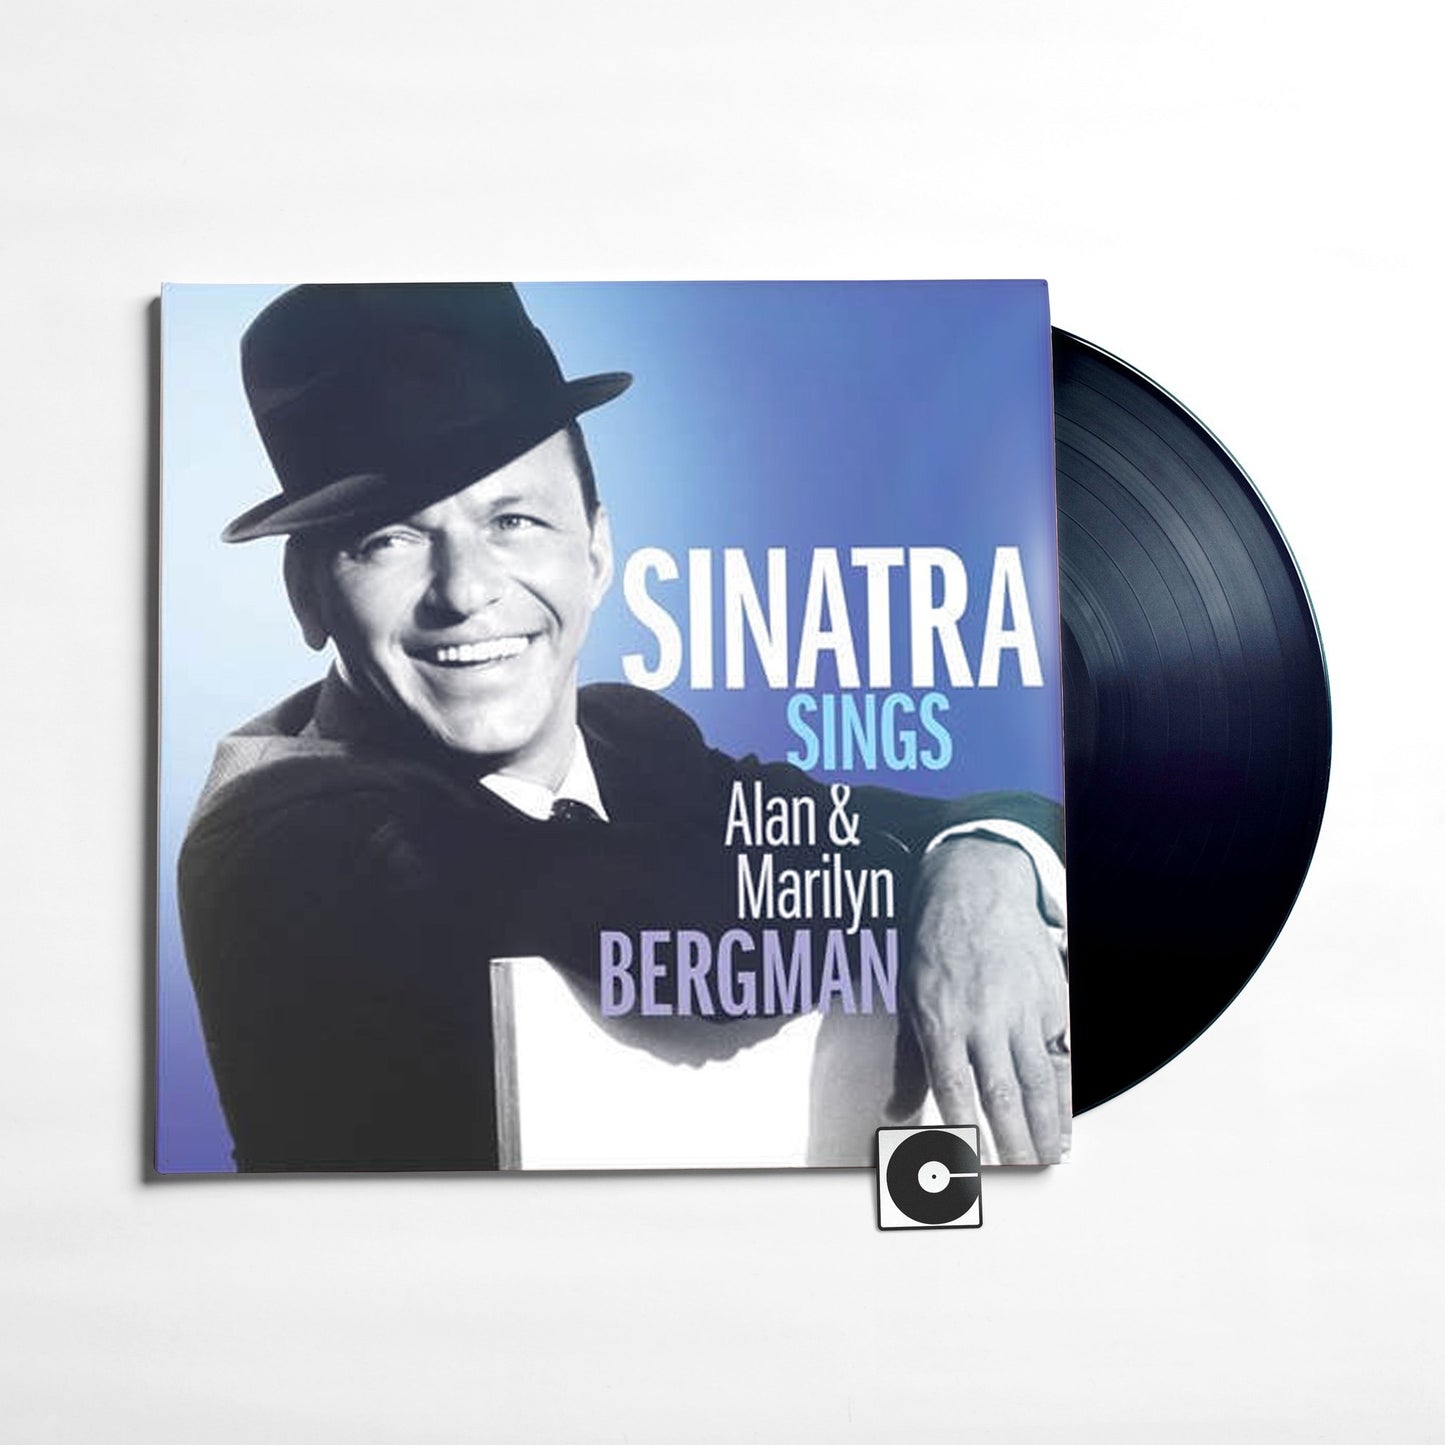 Frank Sinatra - "Sinatra Sings Alan & Marilyn Bergman"